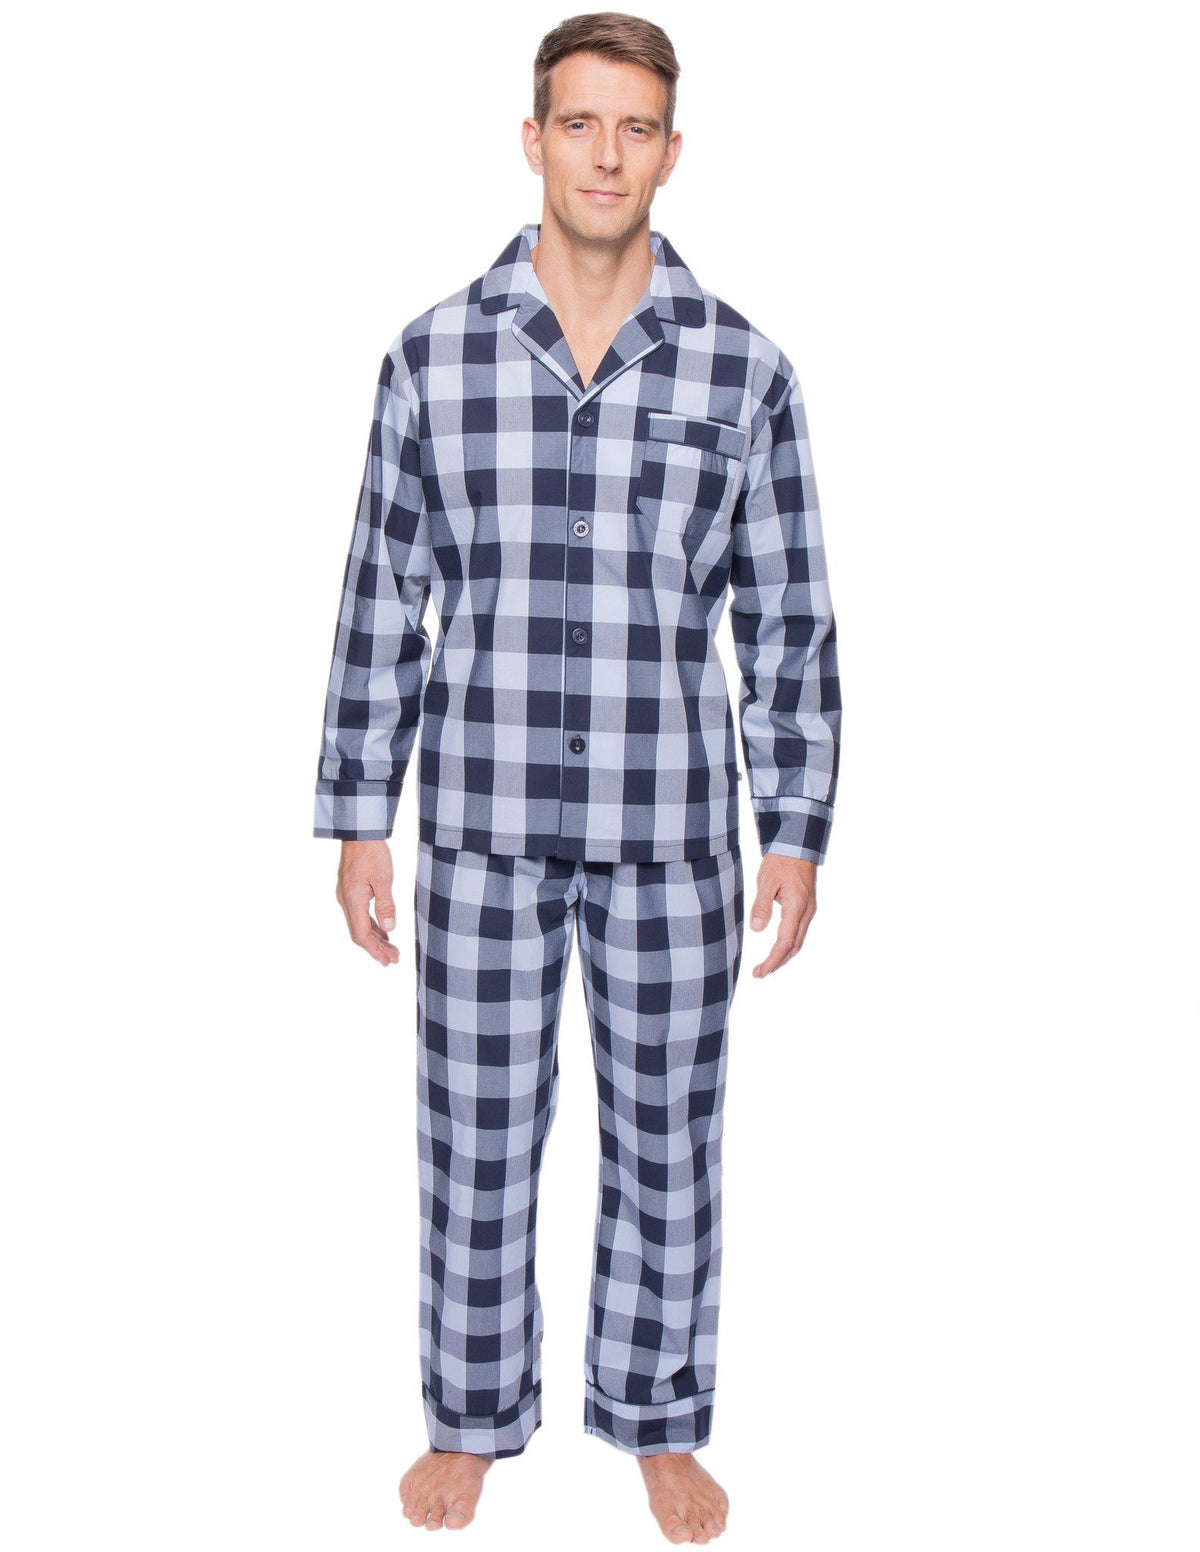 Men's Premium 100% Cotton Woven Pajama Sleepwear Set - Gingham Blue